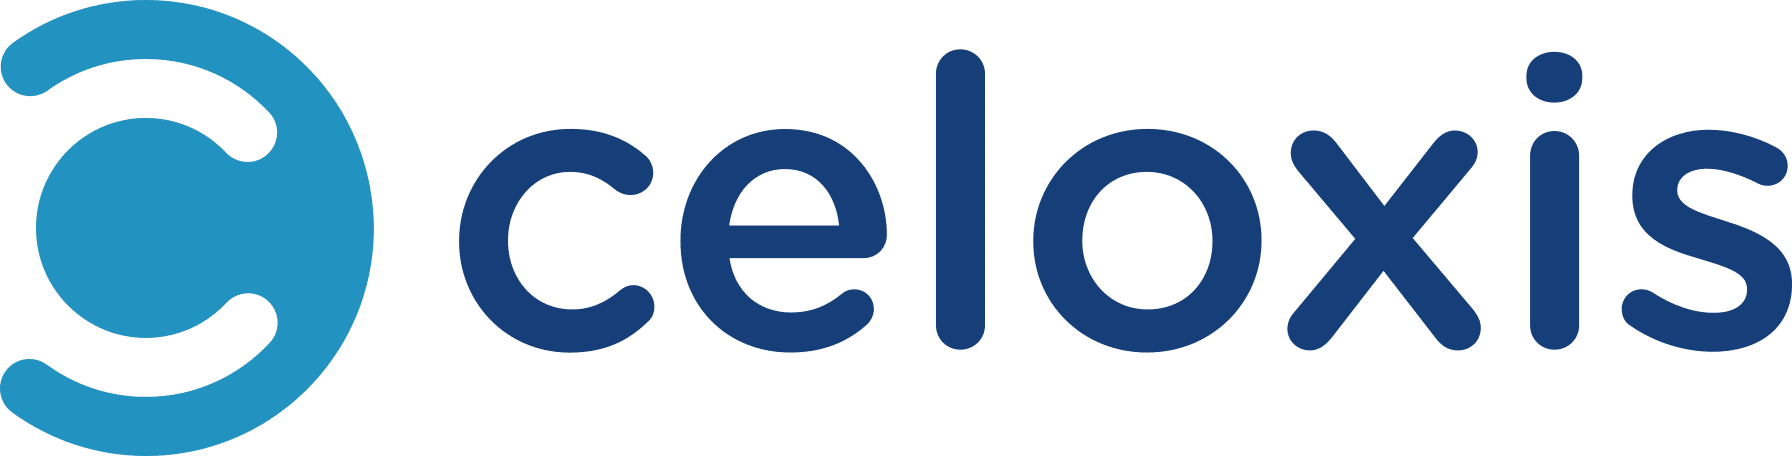 Celoxis - Resource Management Software